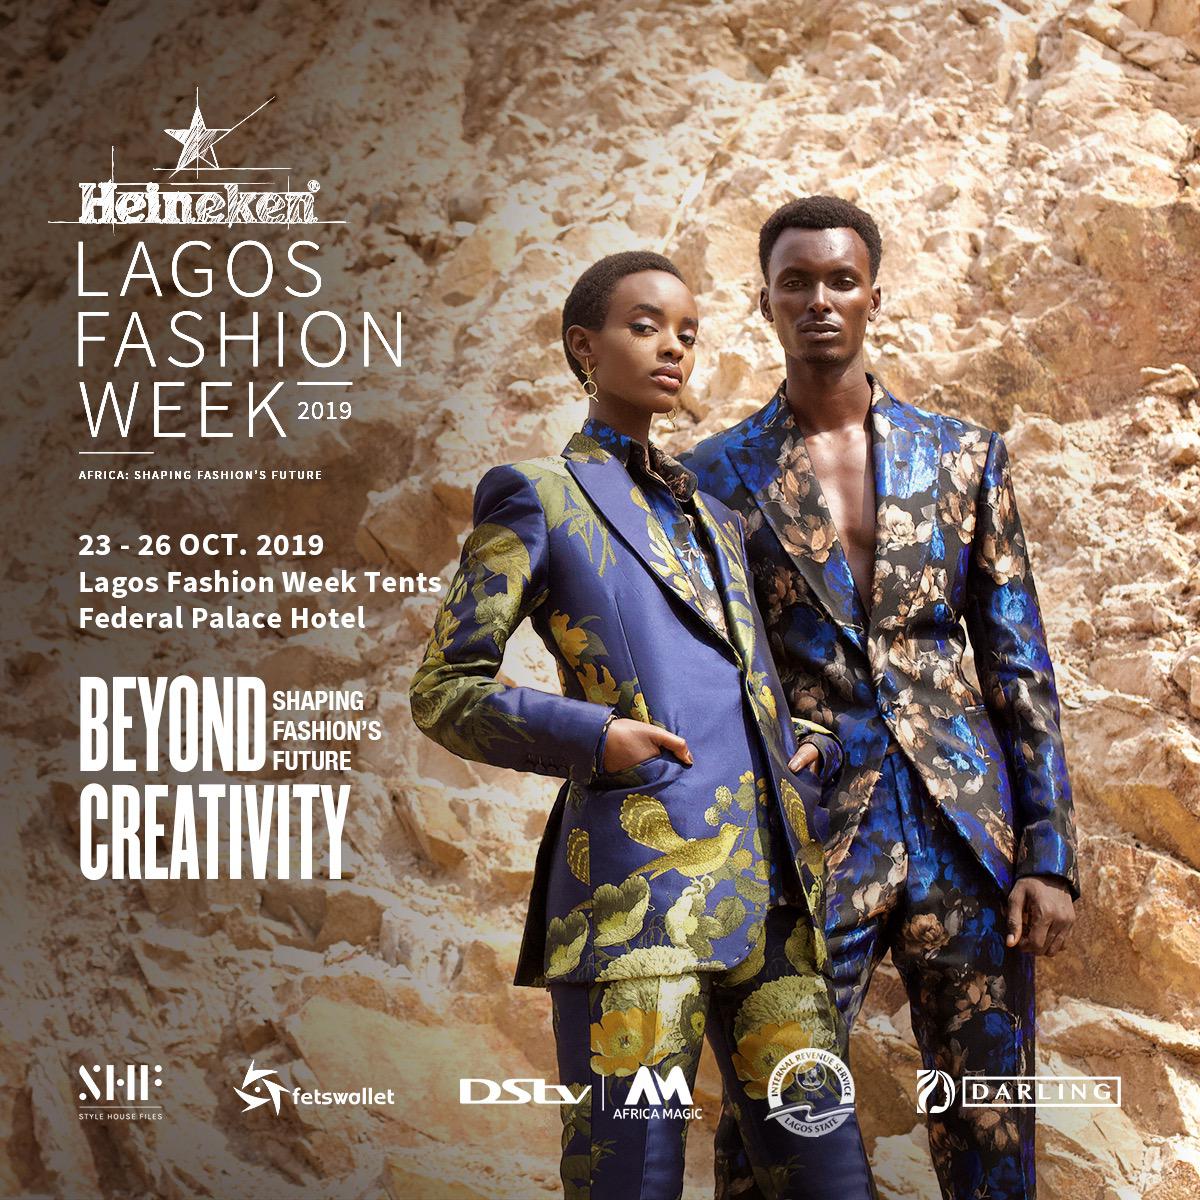 get-ready-for-heineken-lagos-fashion-week-2019-23rd-26th-october